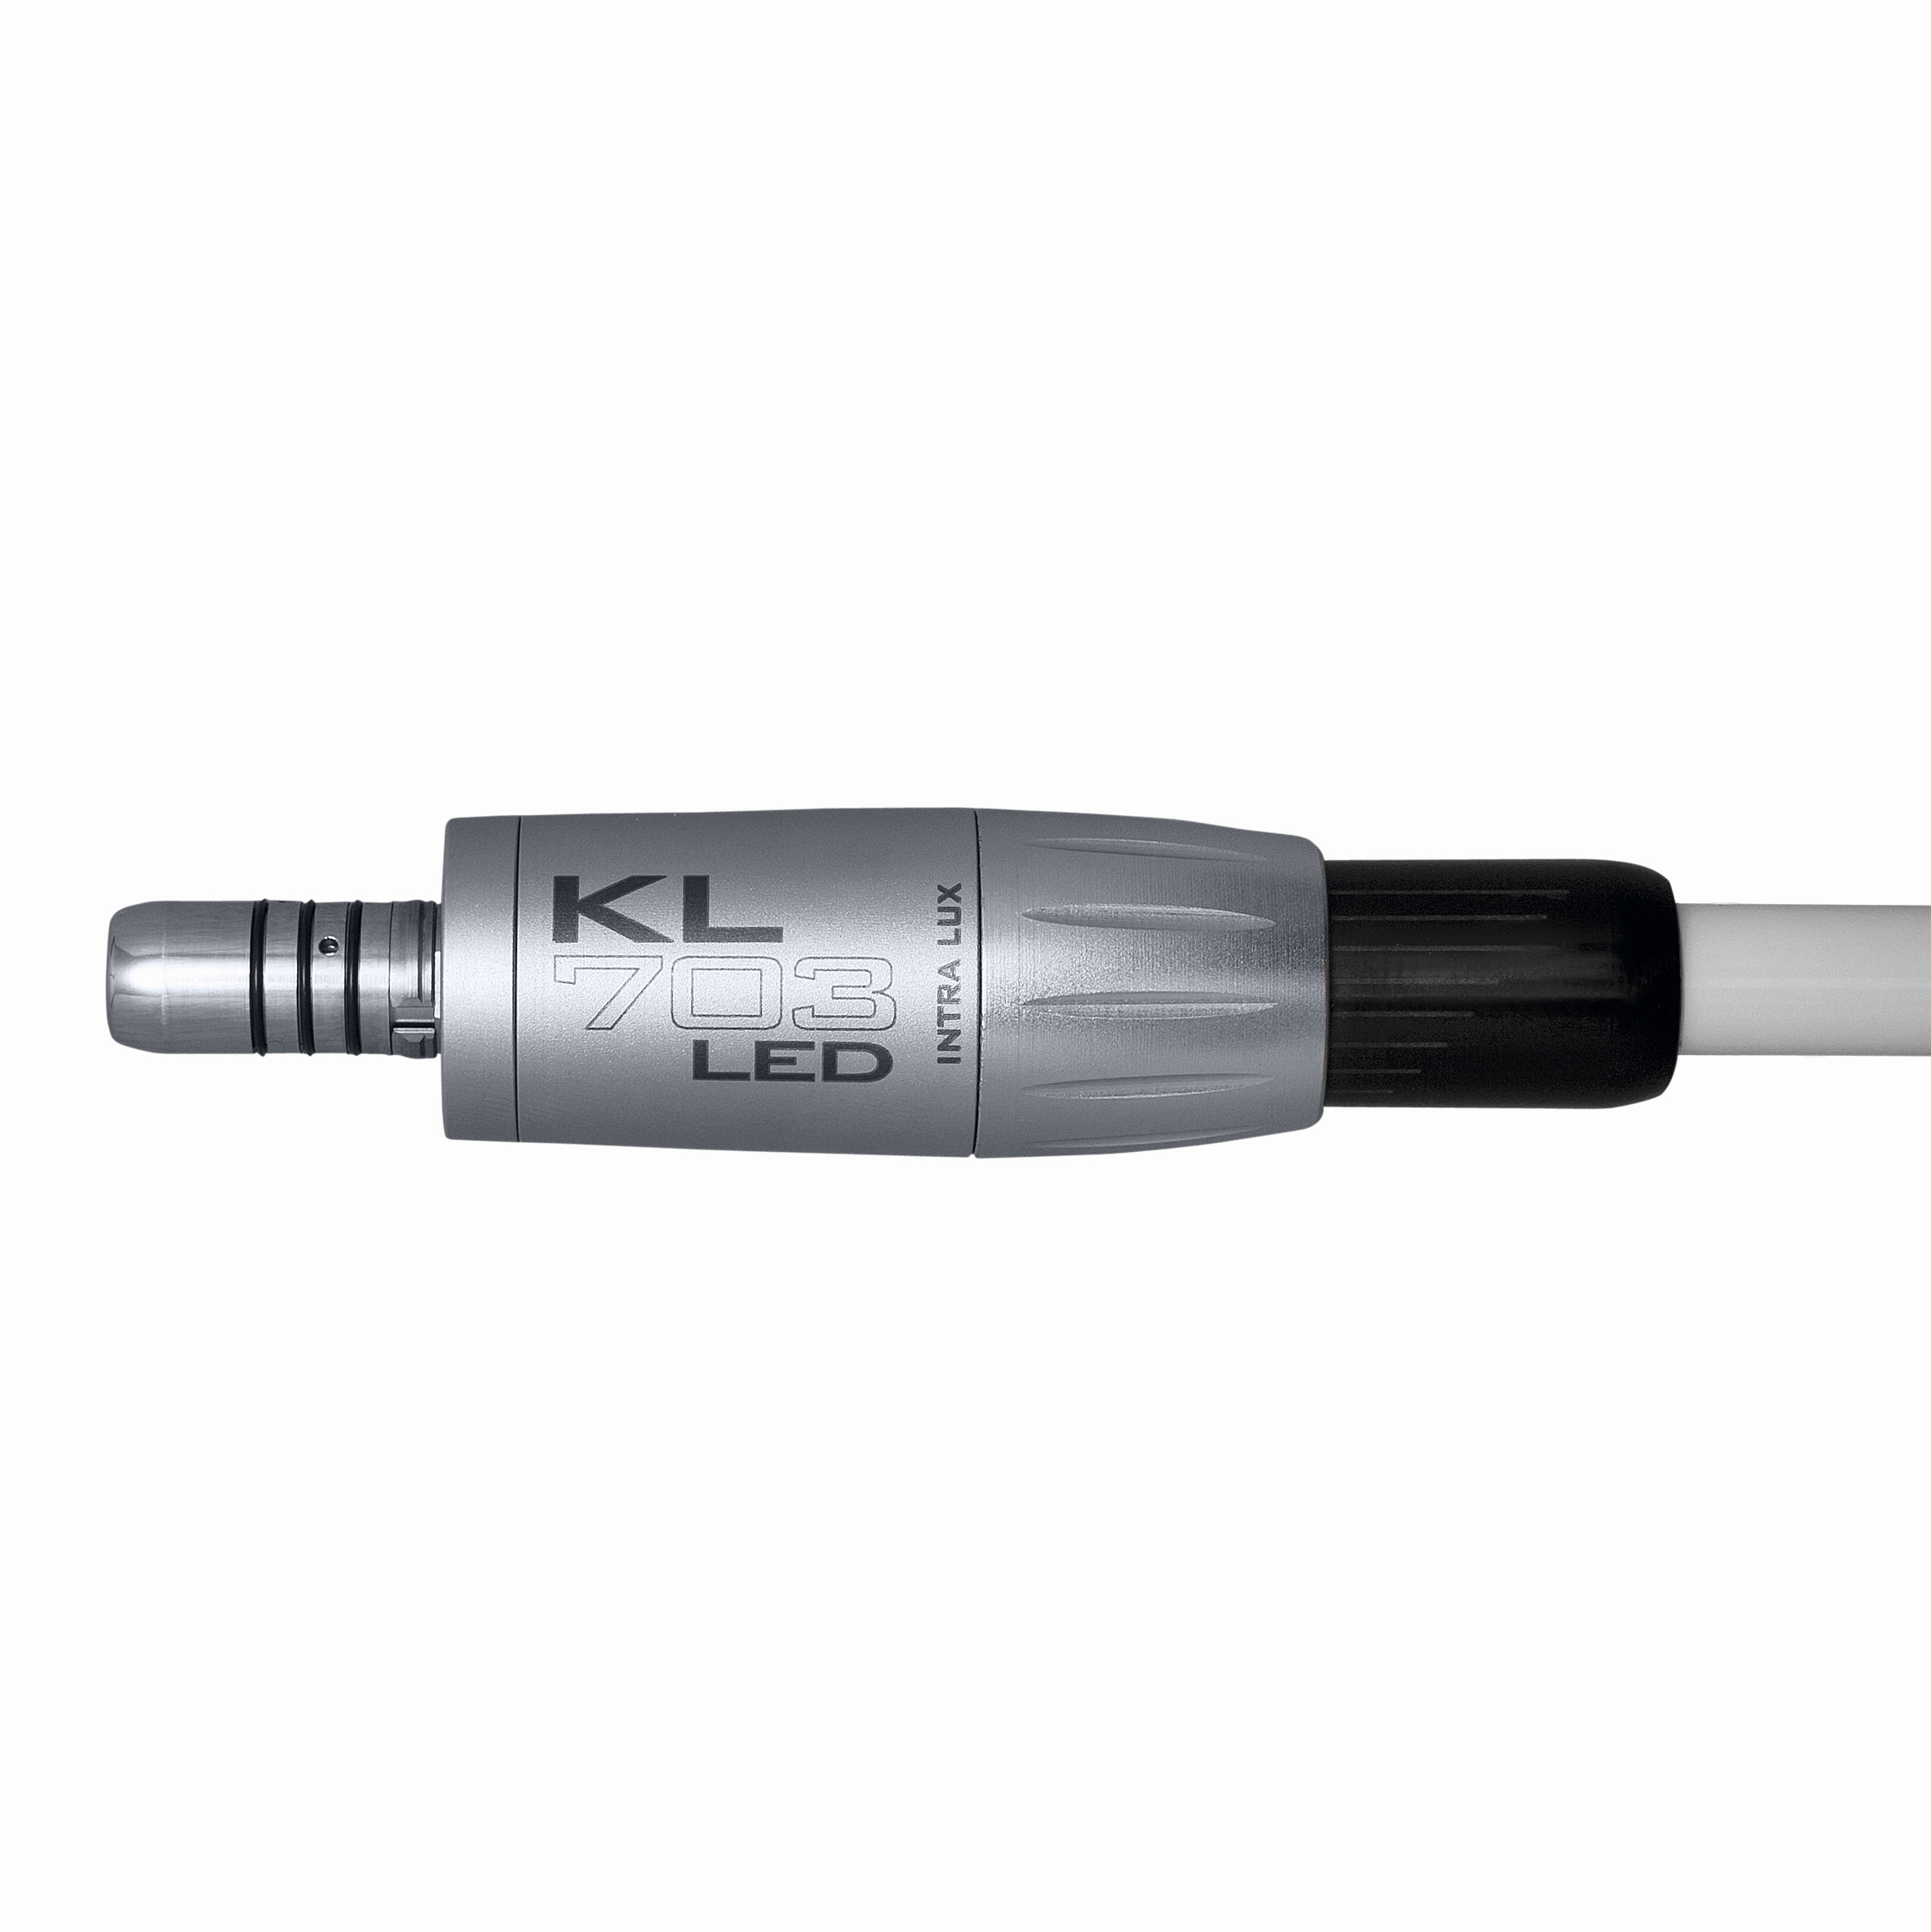 KaVo INTRA KL703 LED Lichtmotor ultra kurz & ultra leicht, bürstenloser DC-Antrieb., 20 - 40000 U/min.